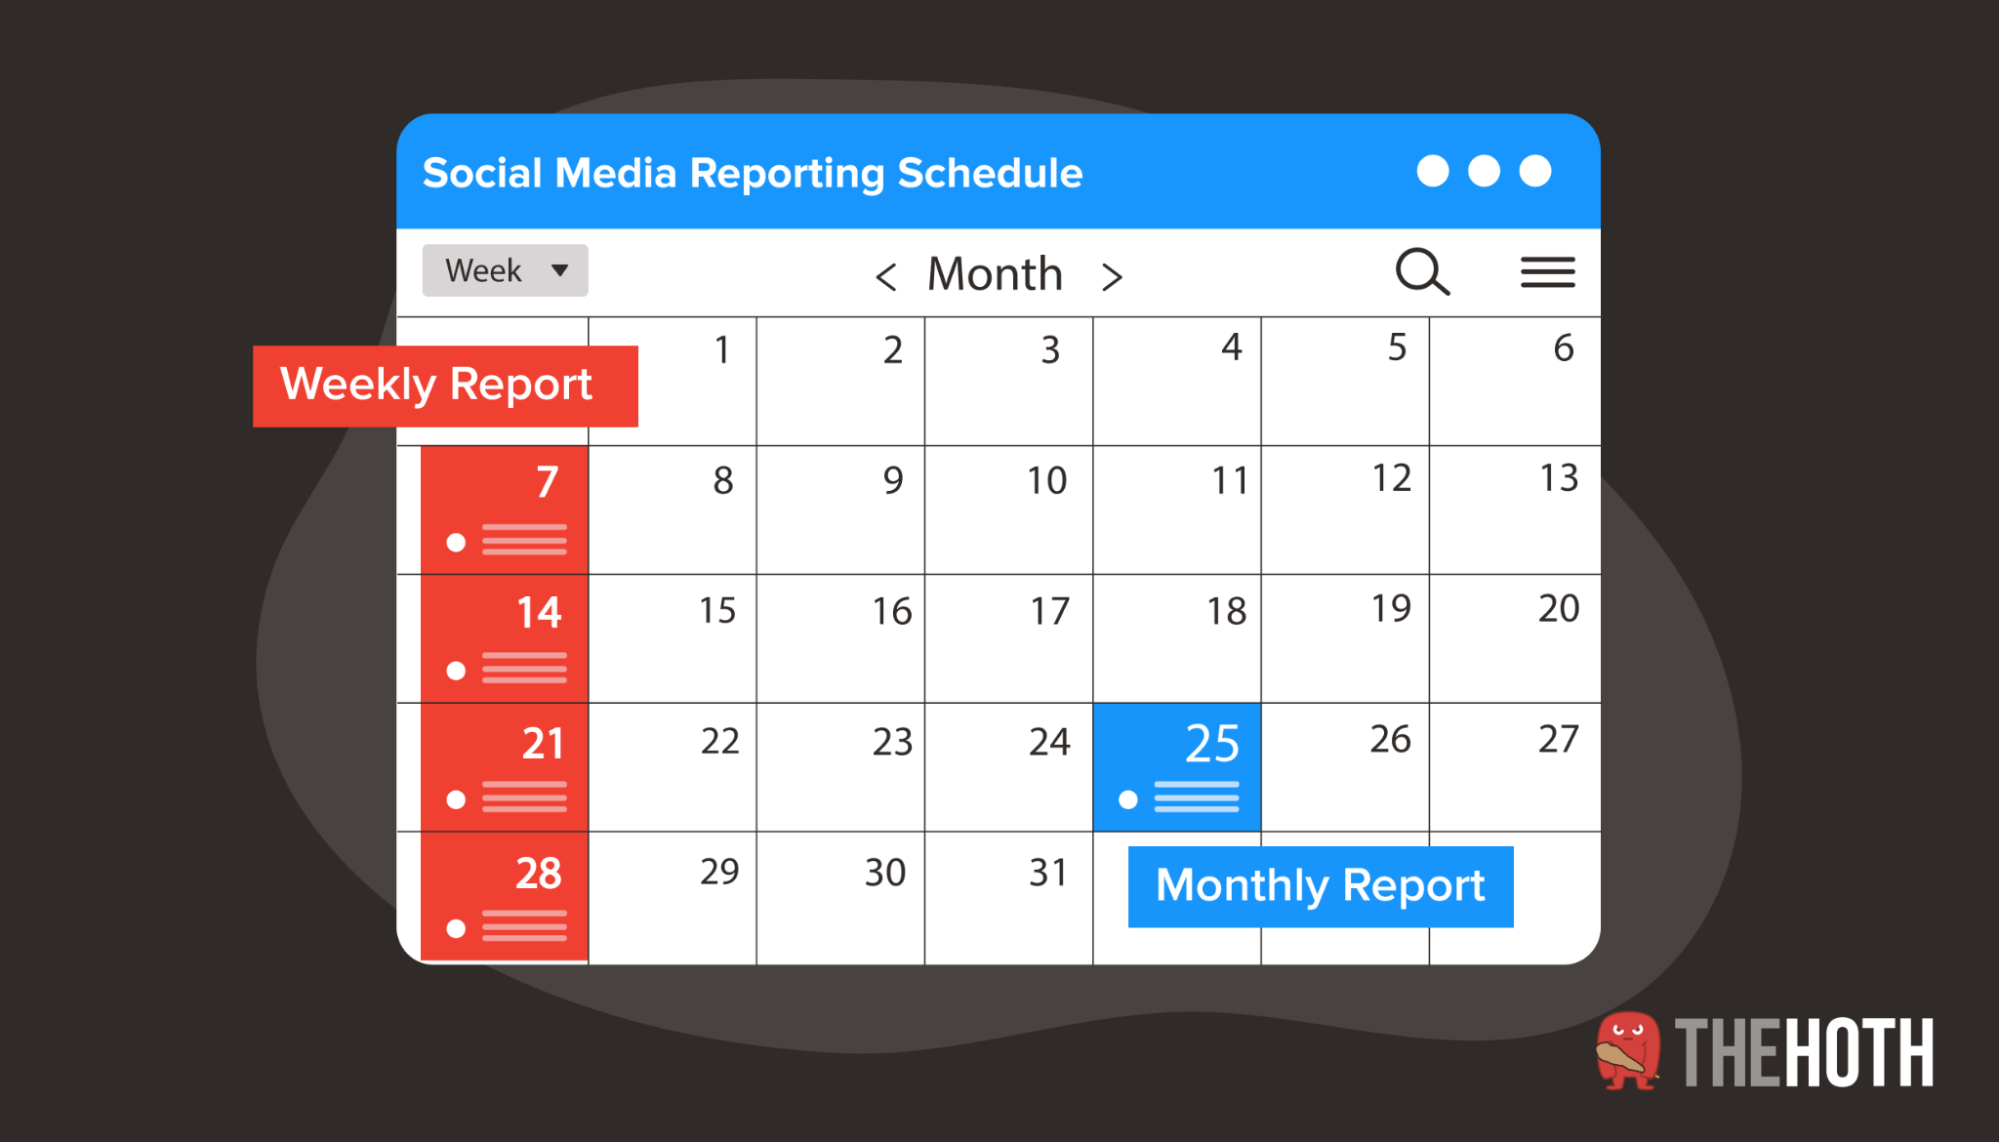 A social media reporting calendar